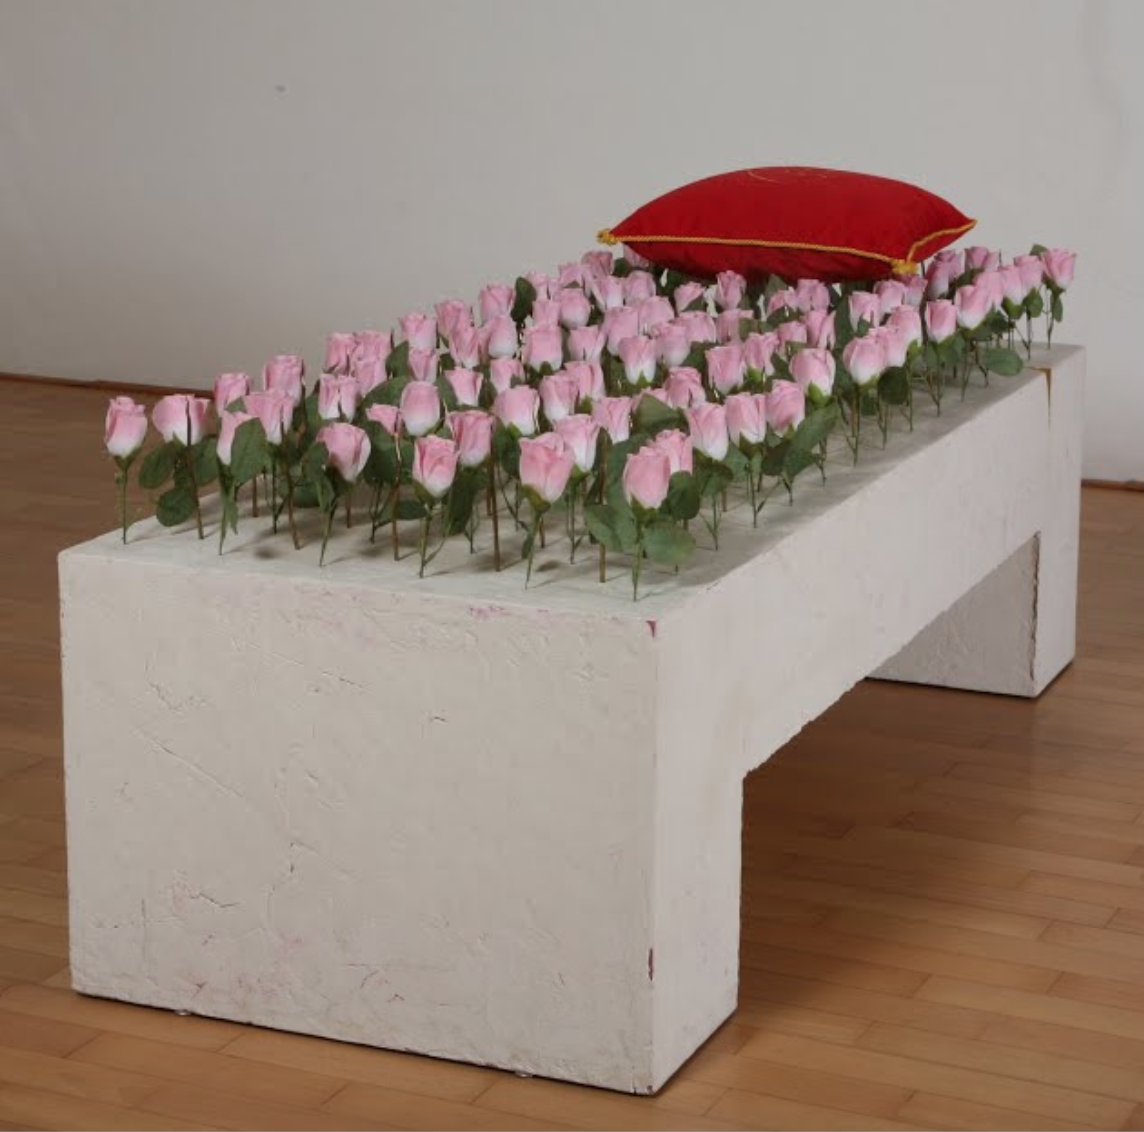 arpeggia:Karol Weisslechner - Bed of roses, 1992-1992